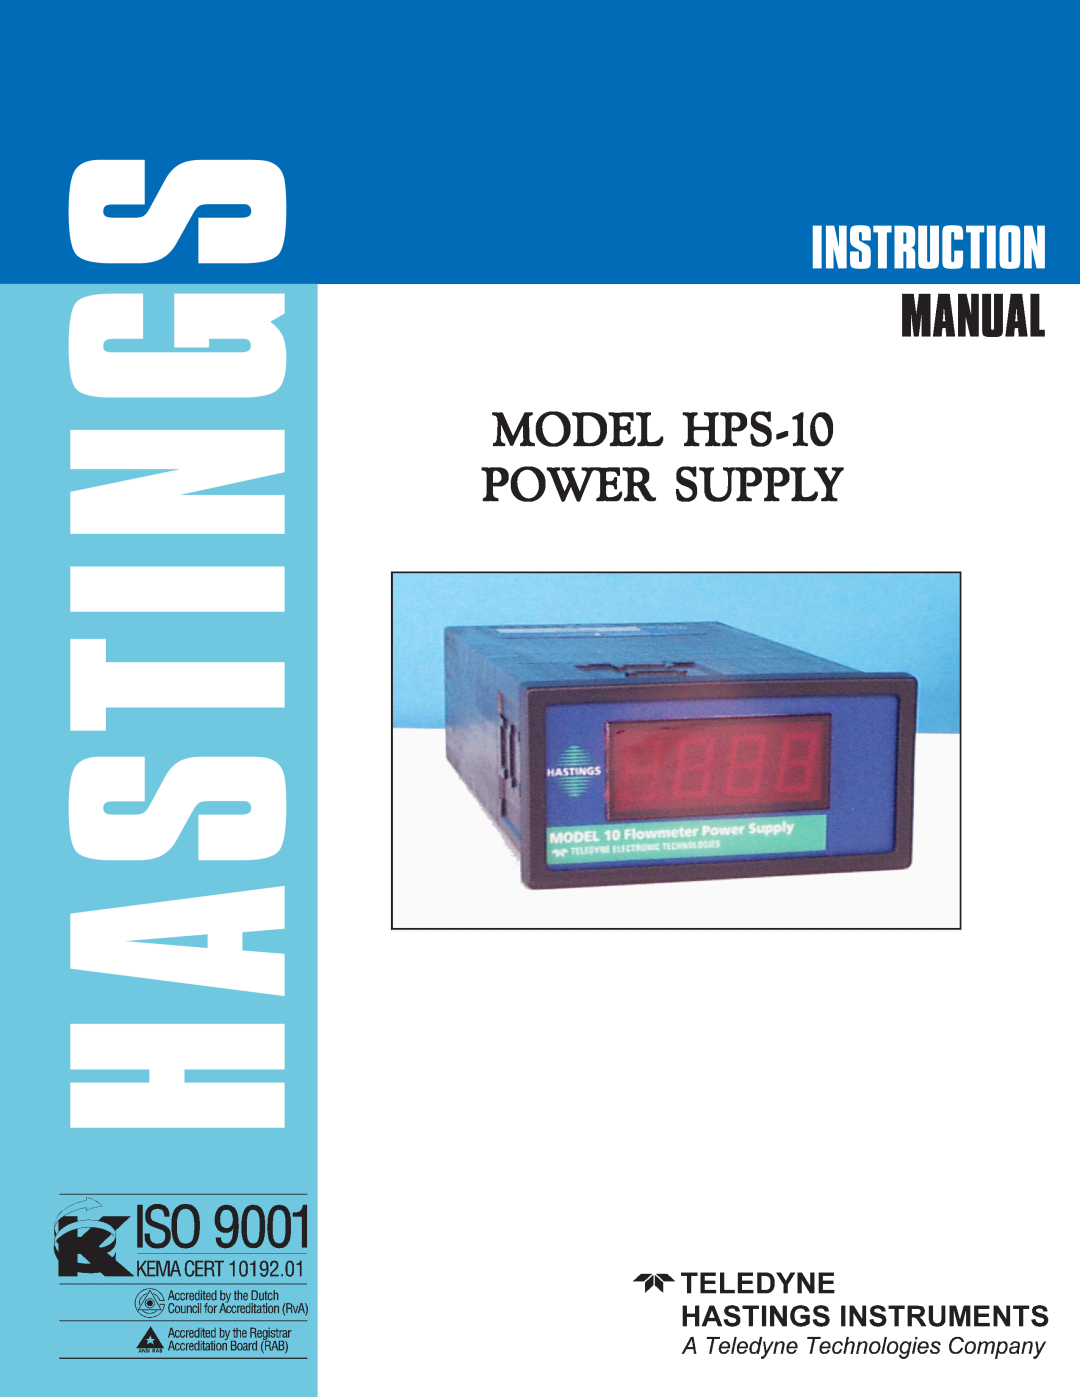 Teledyne instruction manual Hastings, Instruction, Manual, MODEL HPS-10 POWER SUPPLY 